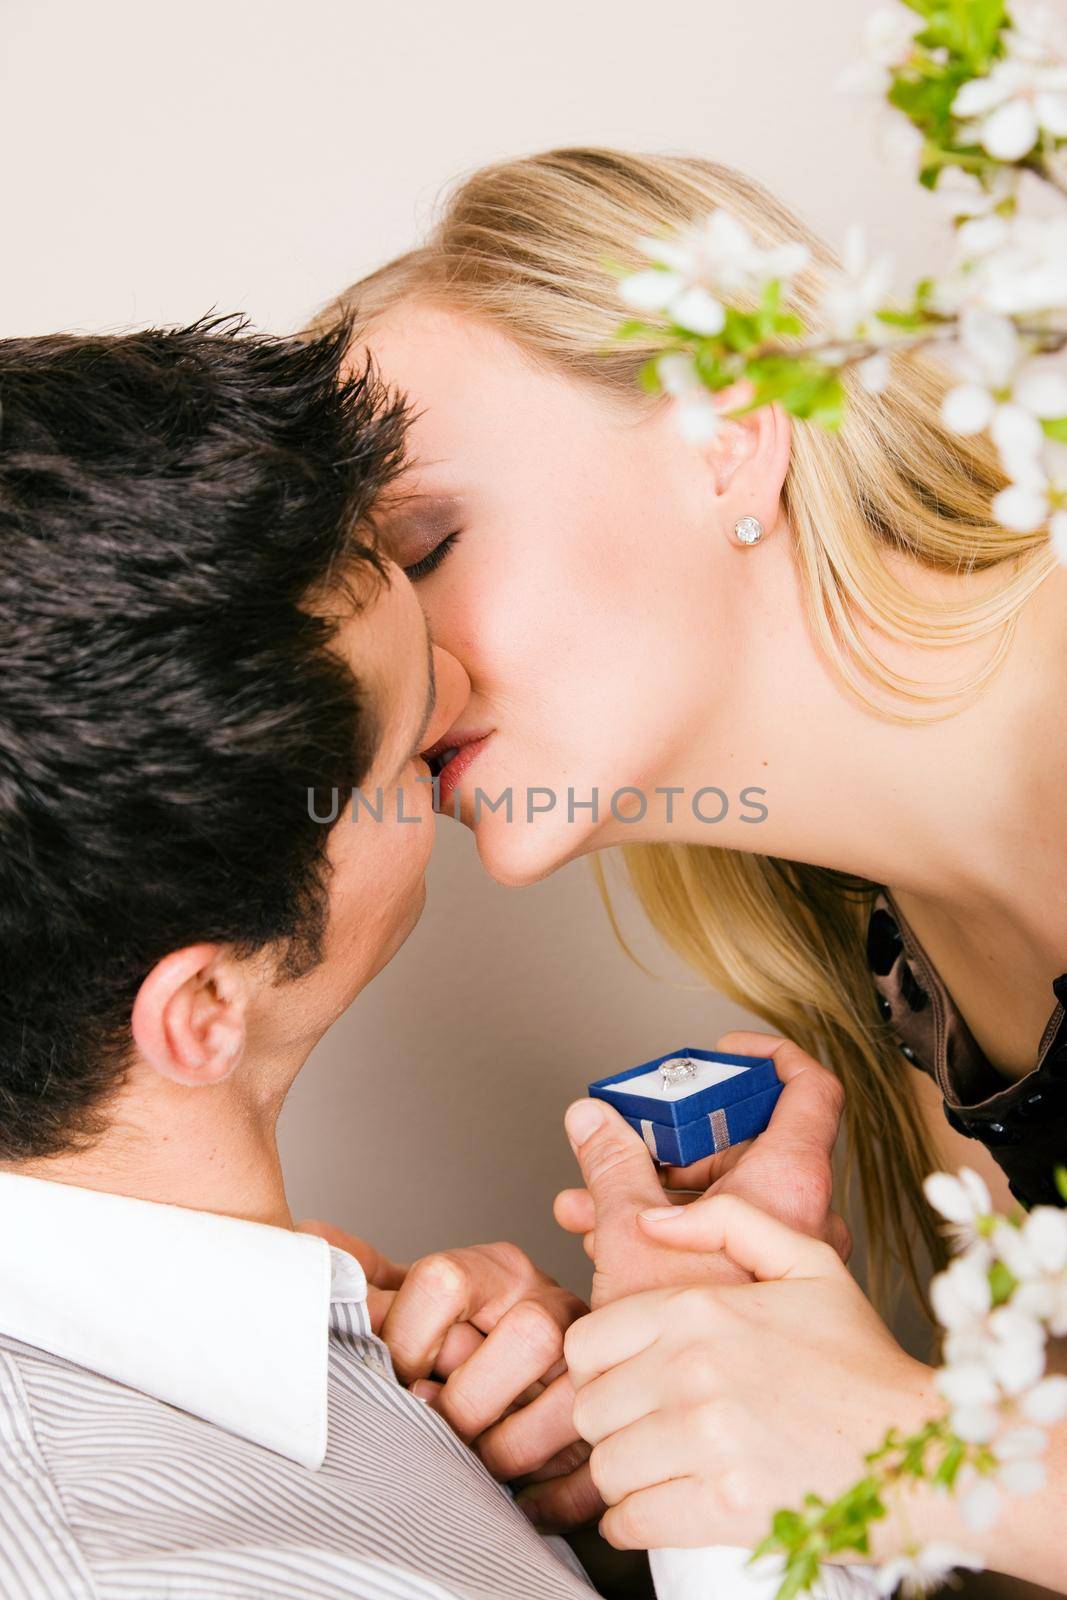 Man promising wedding to woman by Kzenon